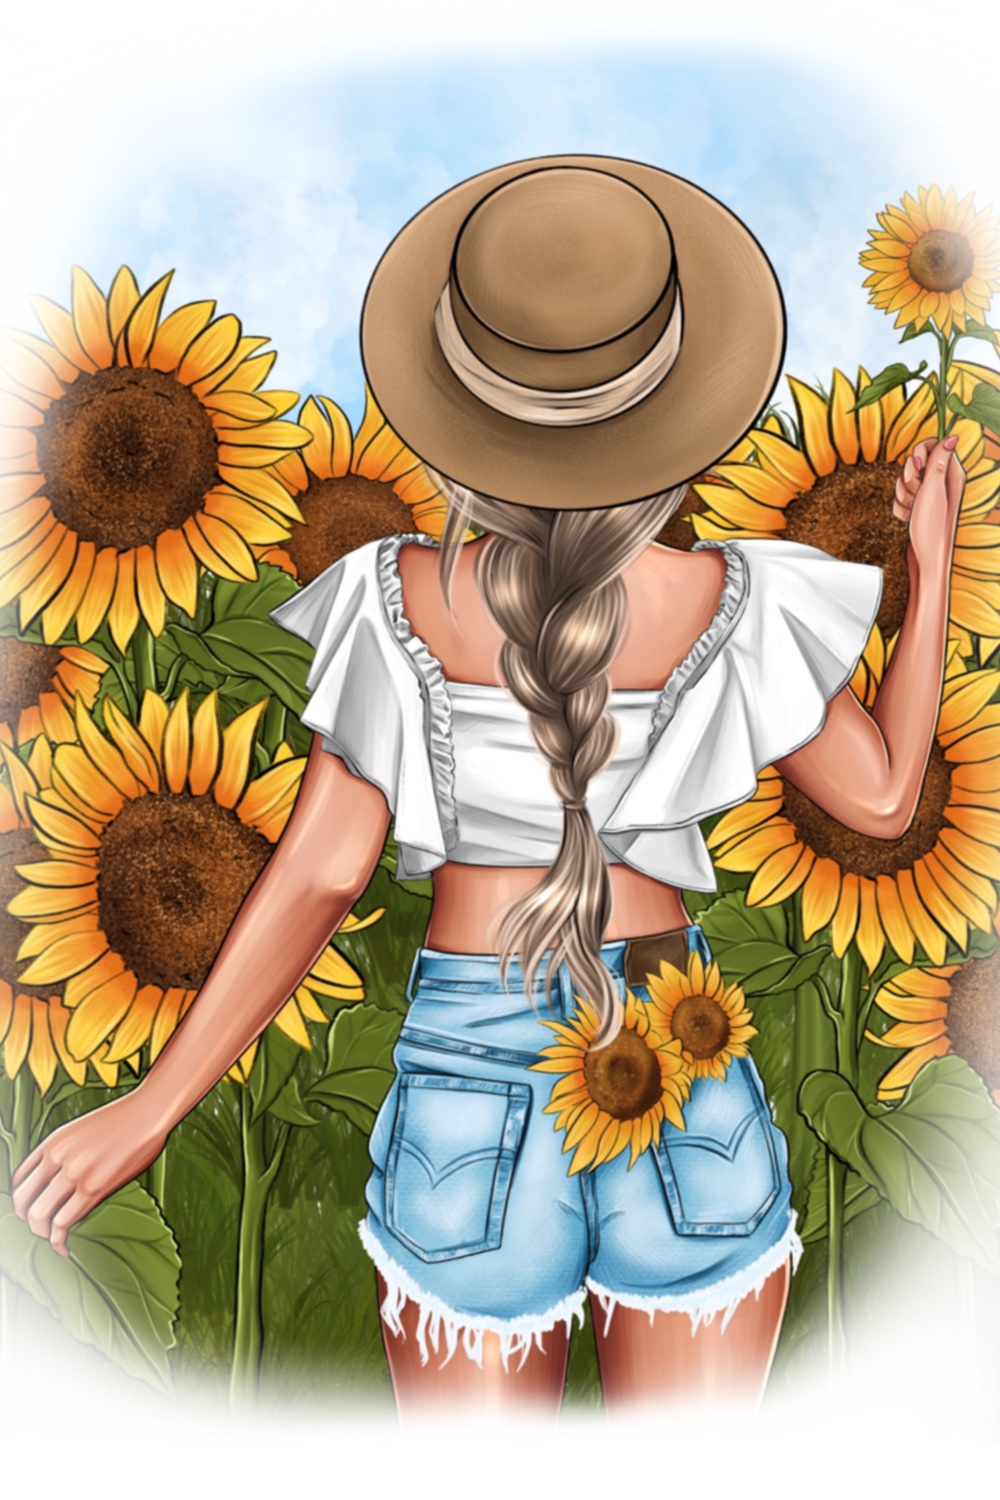 Fashionable Girl Sunflowers Clipart Pinterest Image.